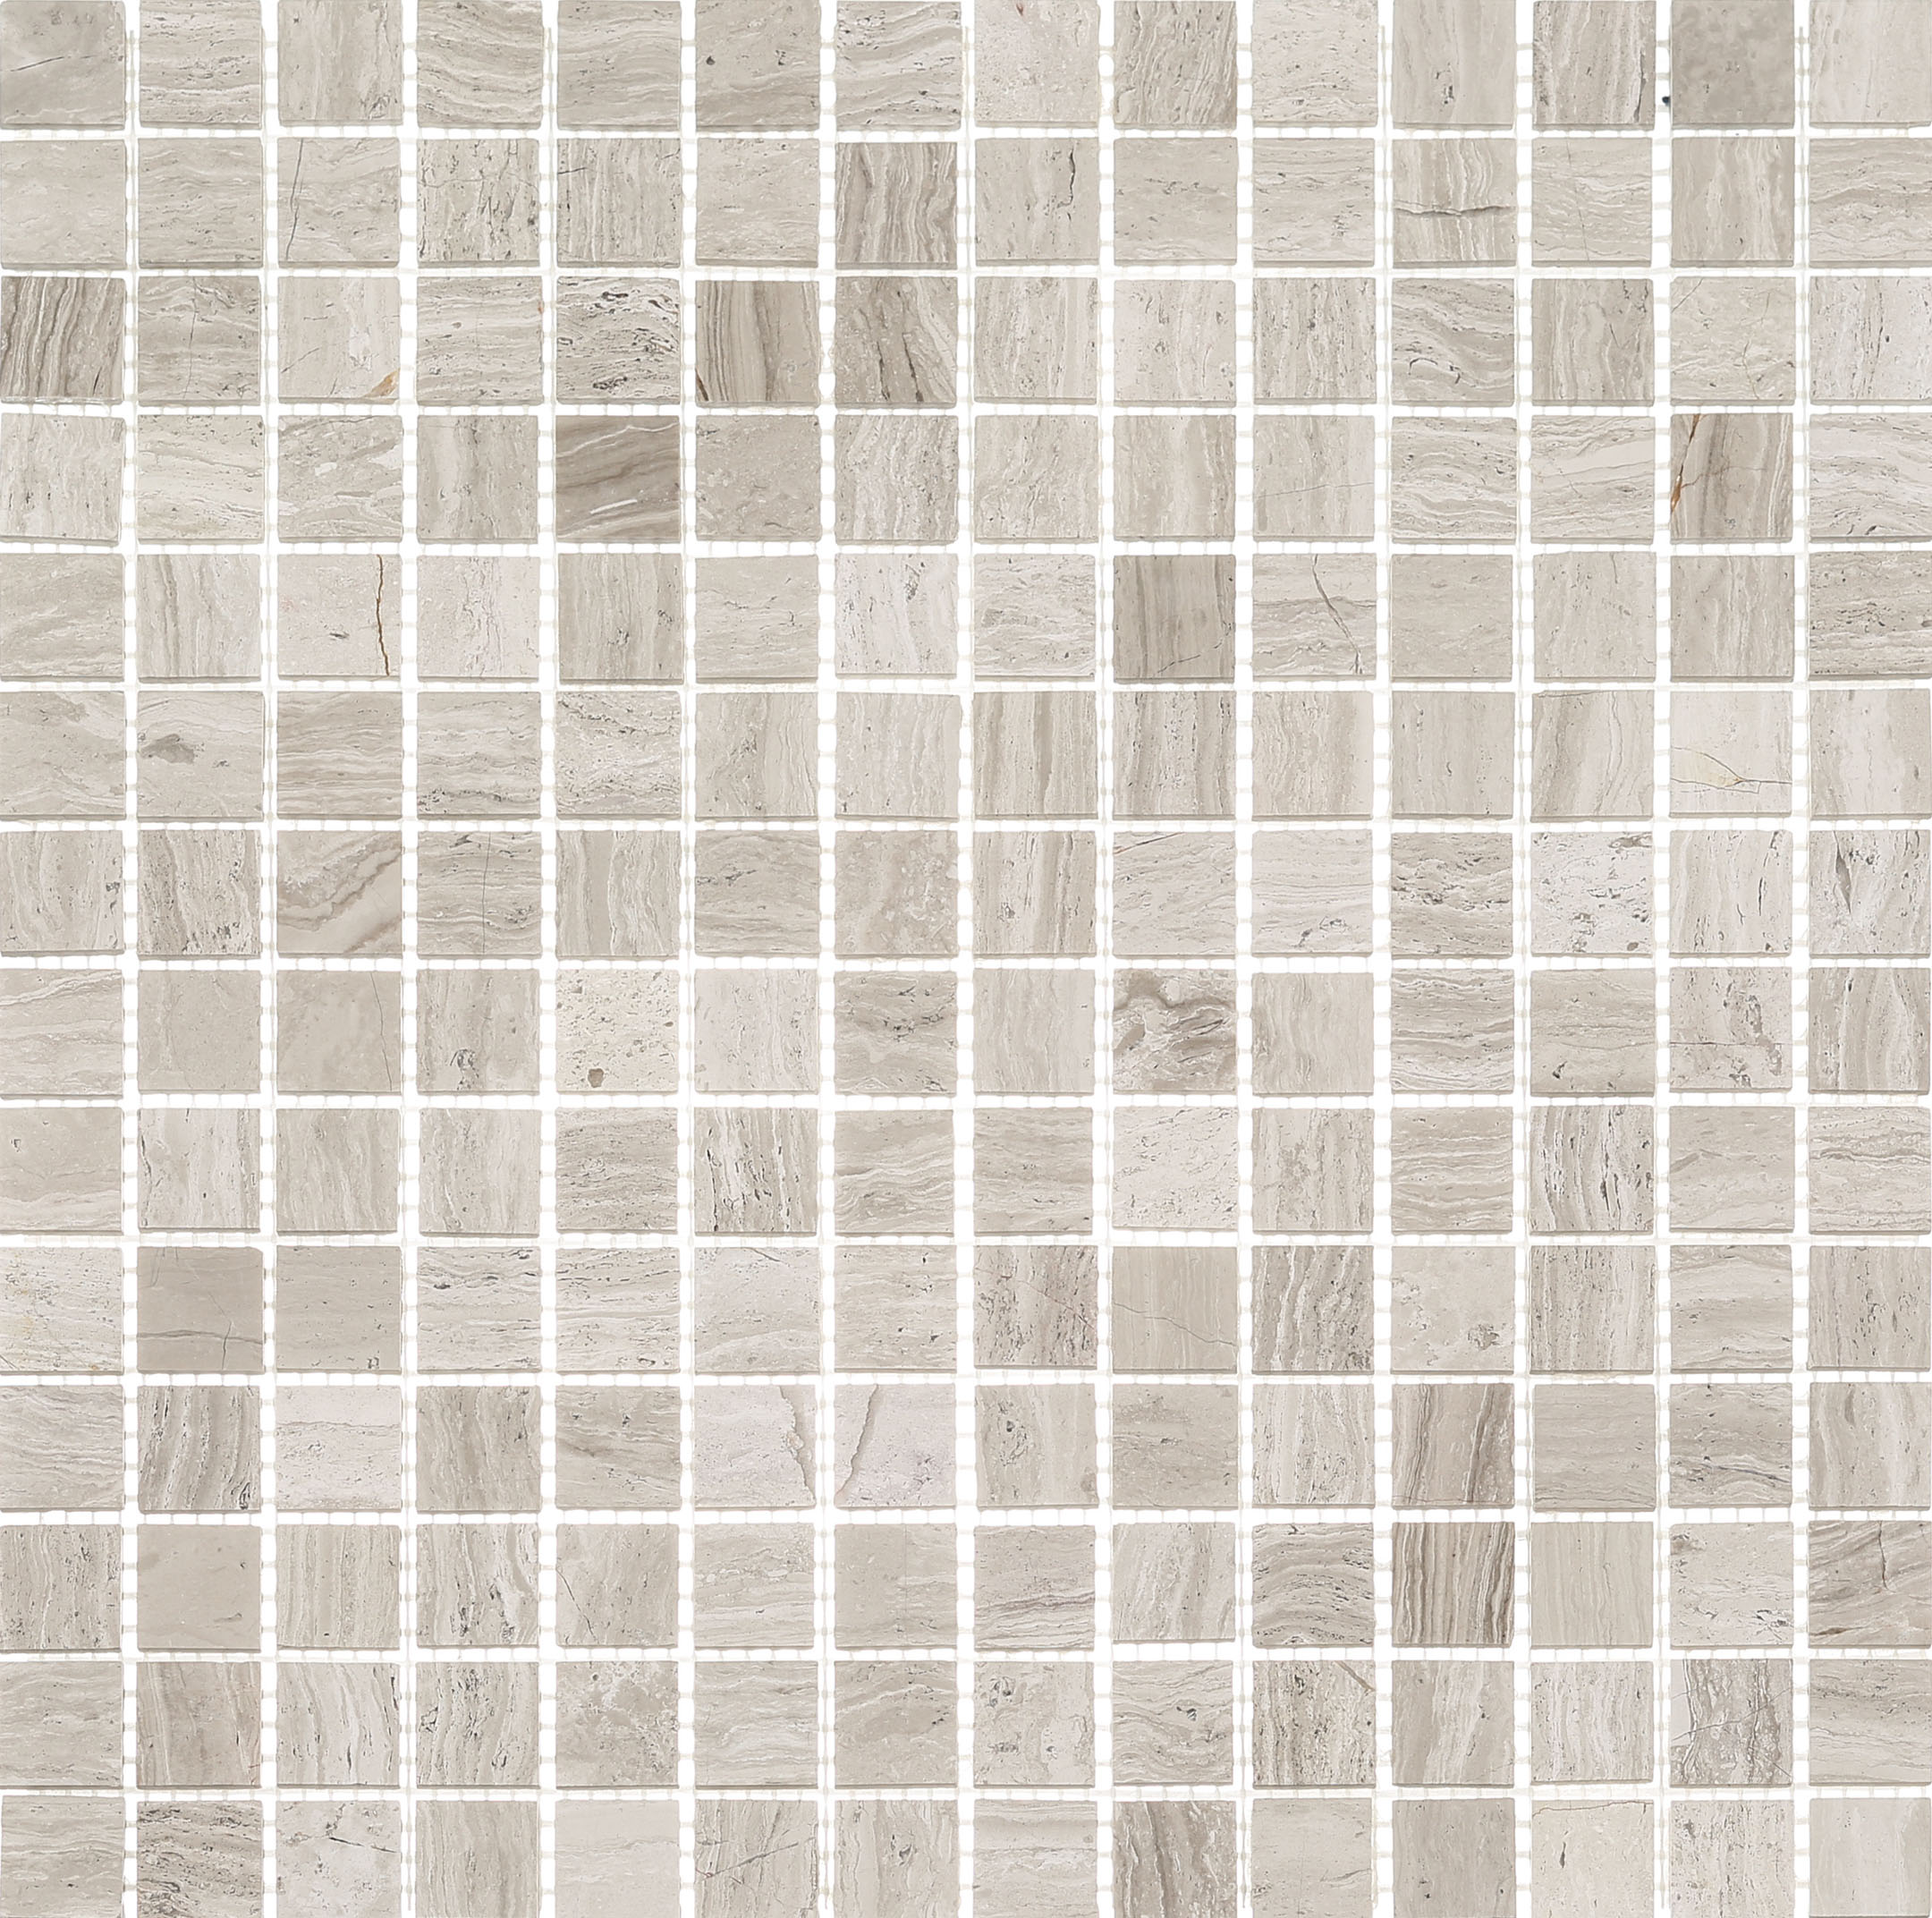 фото Мозаика starmosaic grey polished серый мрамор из натурального камня 305х305х4 мм полированная